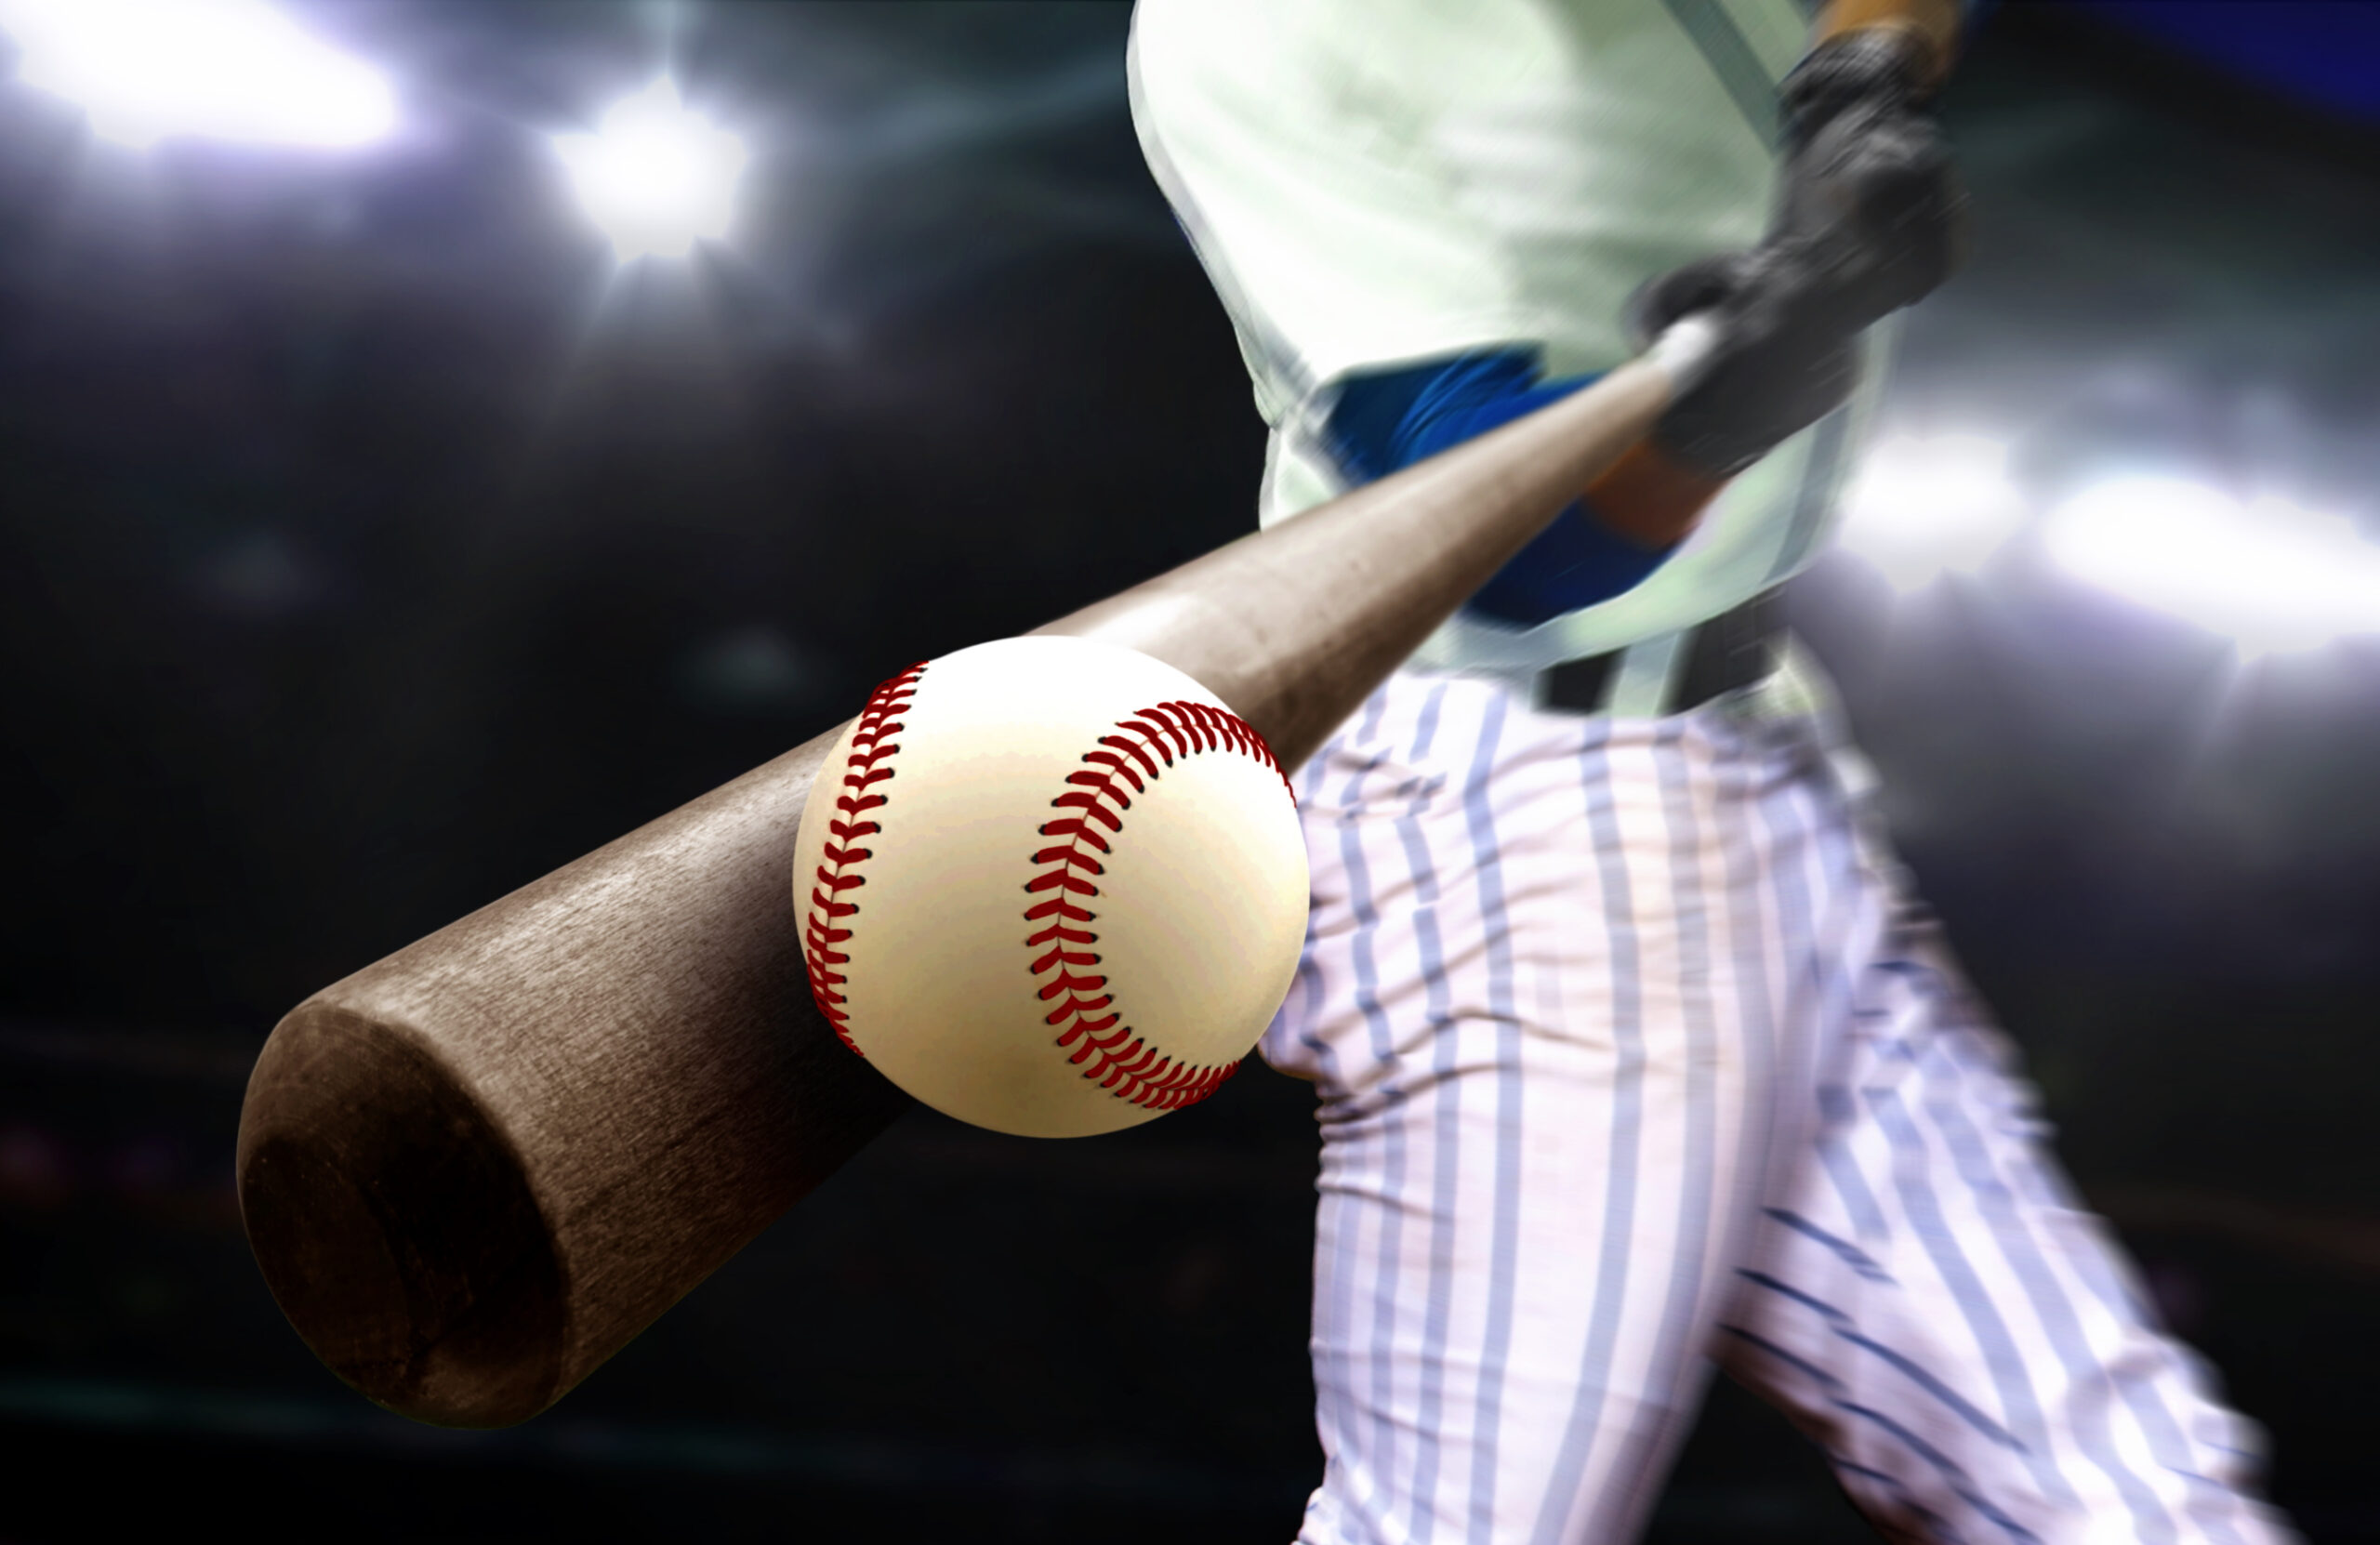 Baseball player swing hitting ball with bat in close up under stadium spotlights